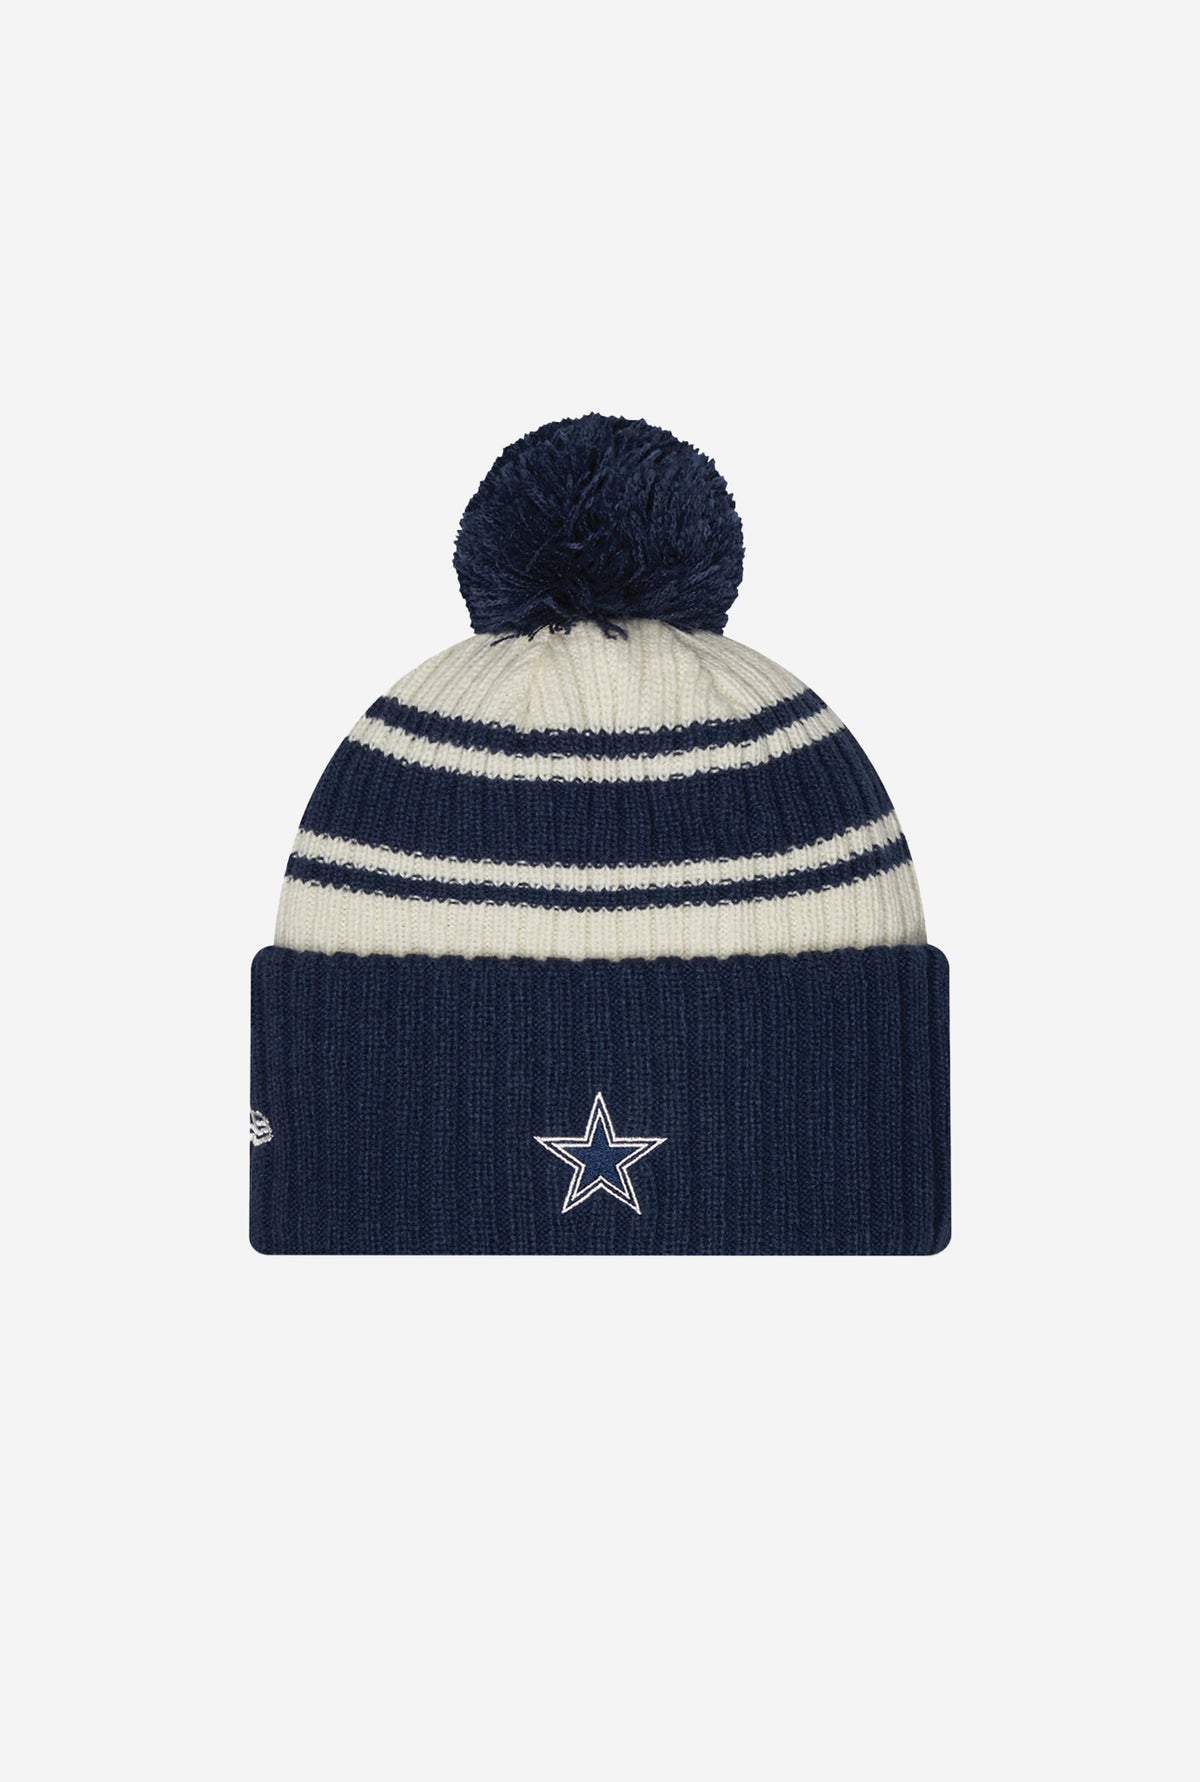 Dallas Cowboys Sideline Sport Knit Beanie